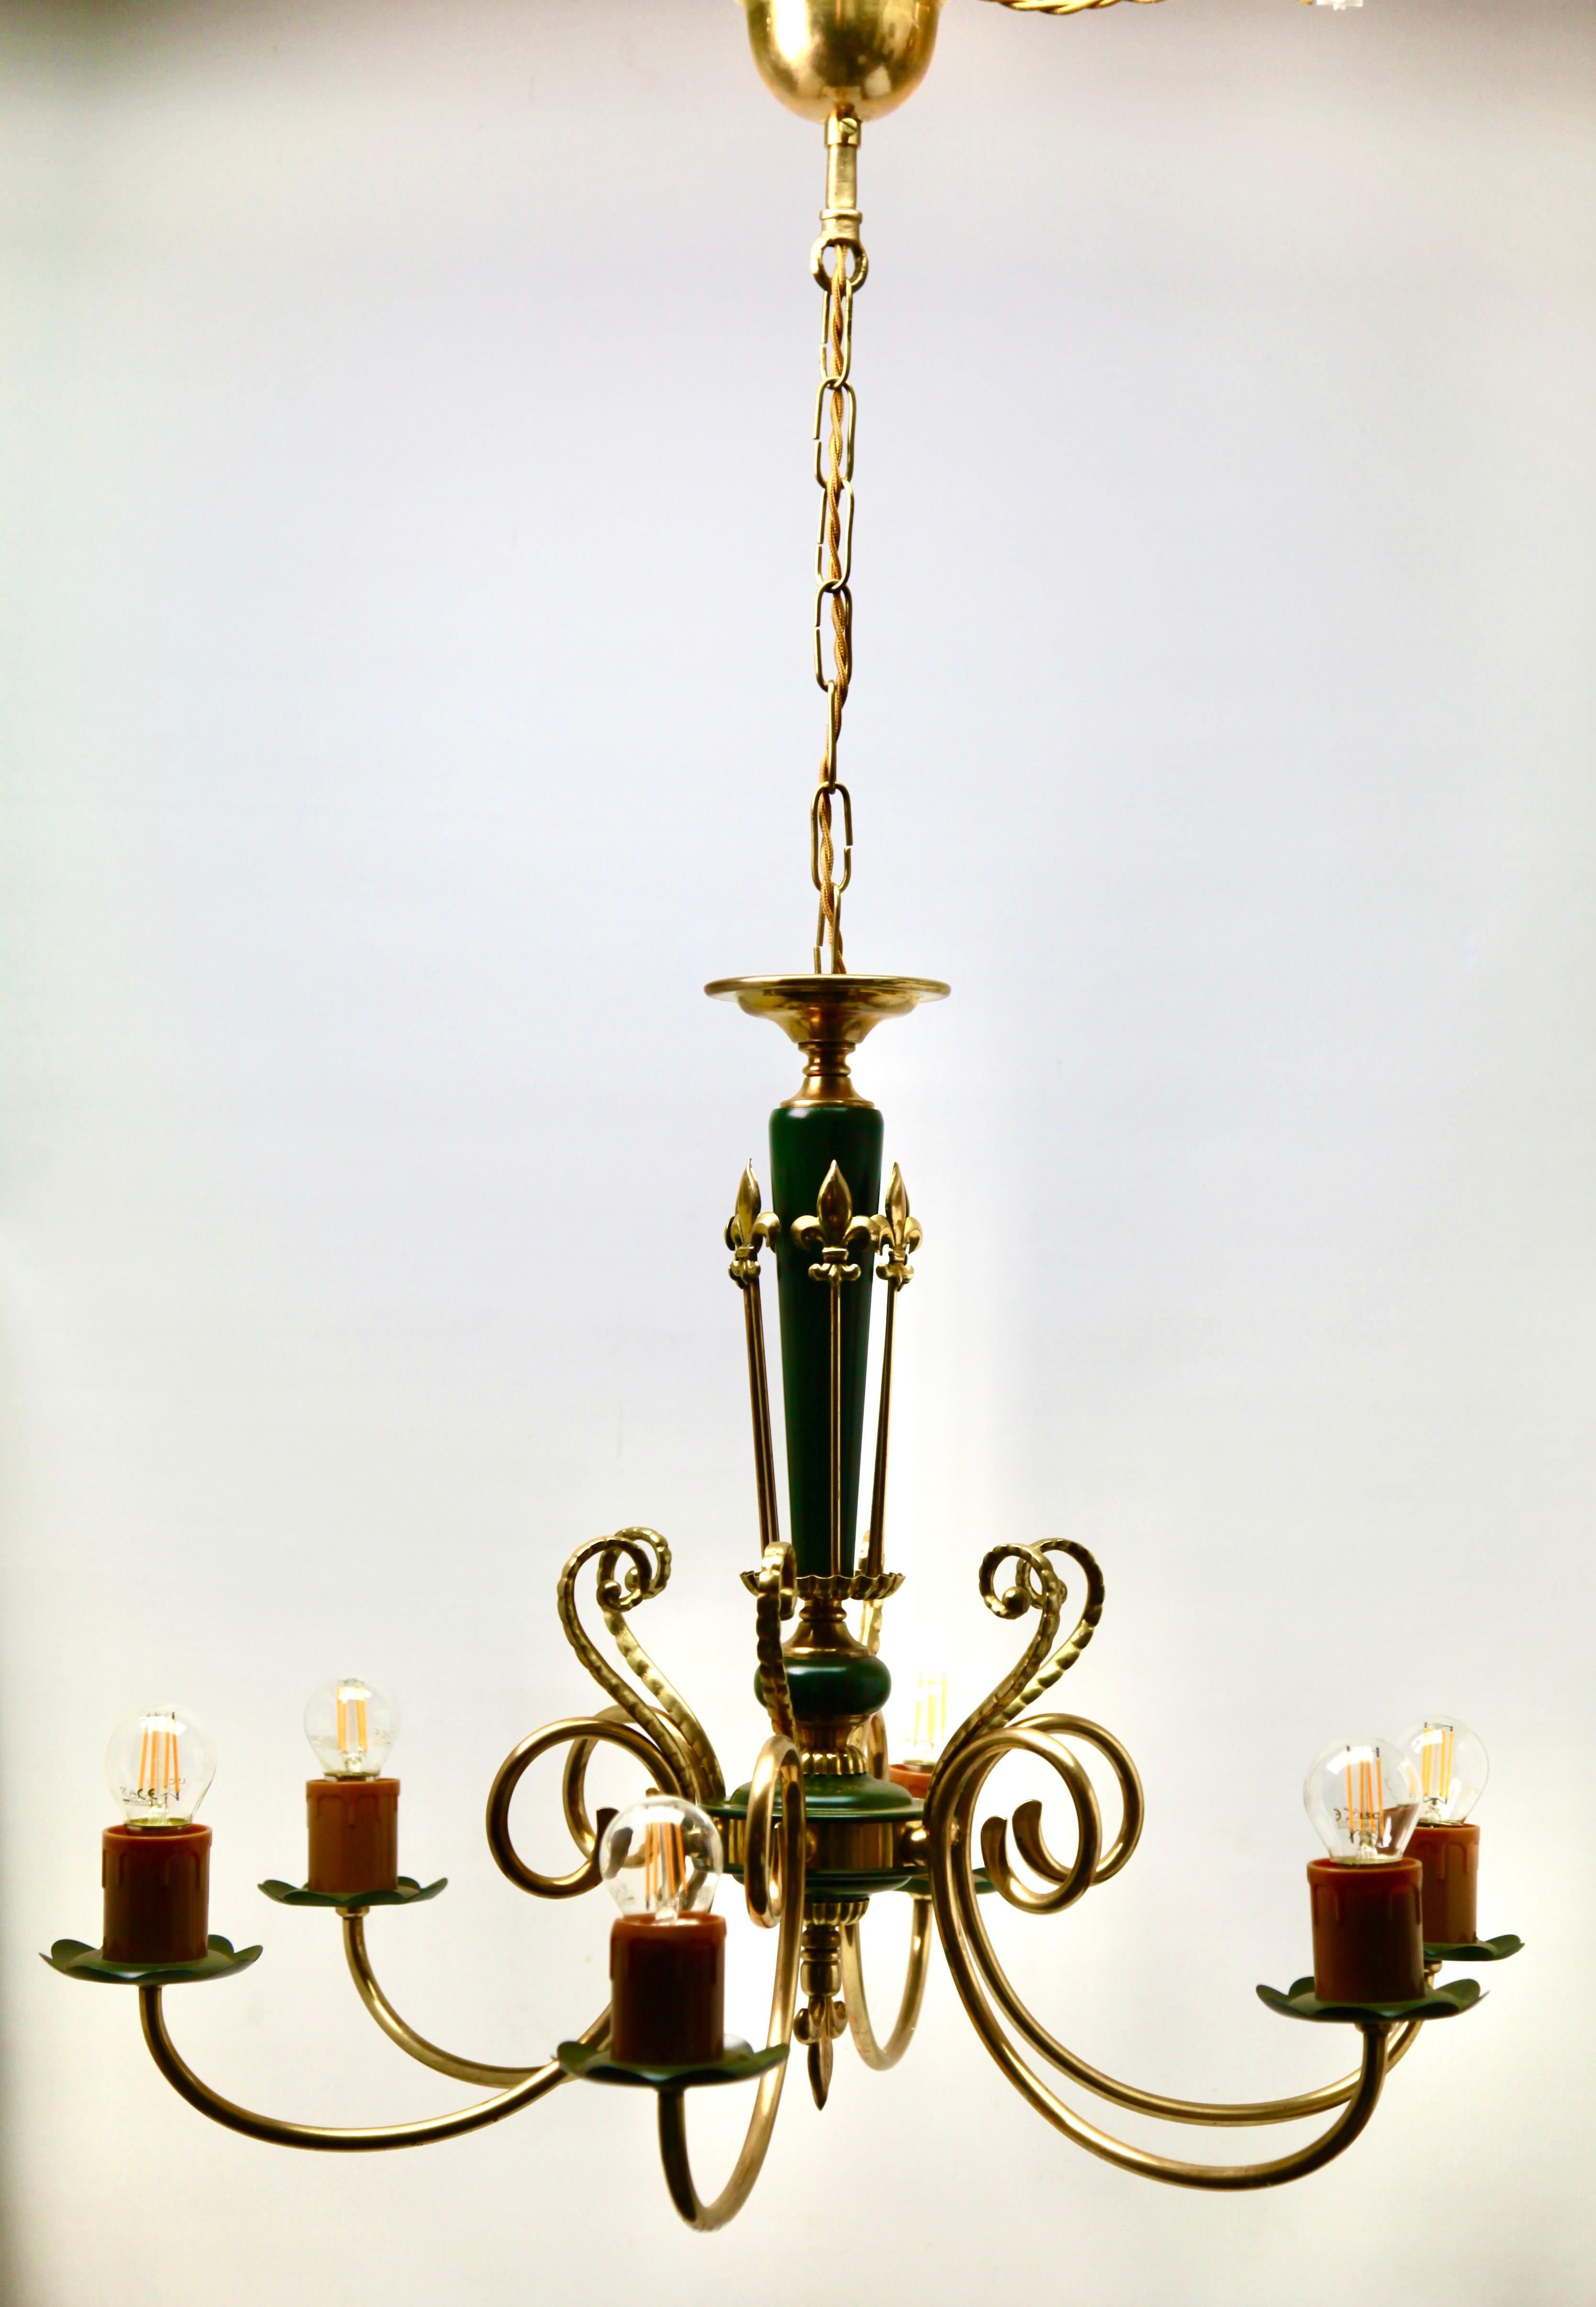 Vintage Chandelier Brass and Wood Decoratief Details Six Arms Belgium, 1950s 5